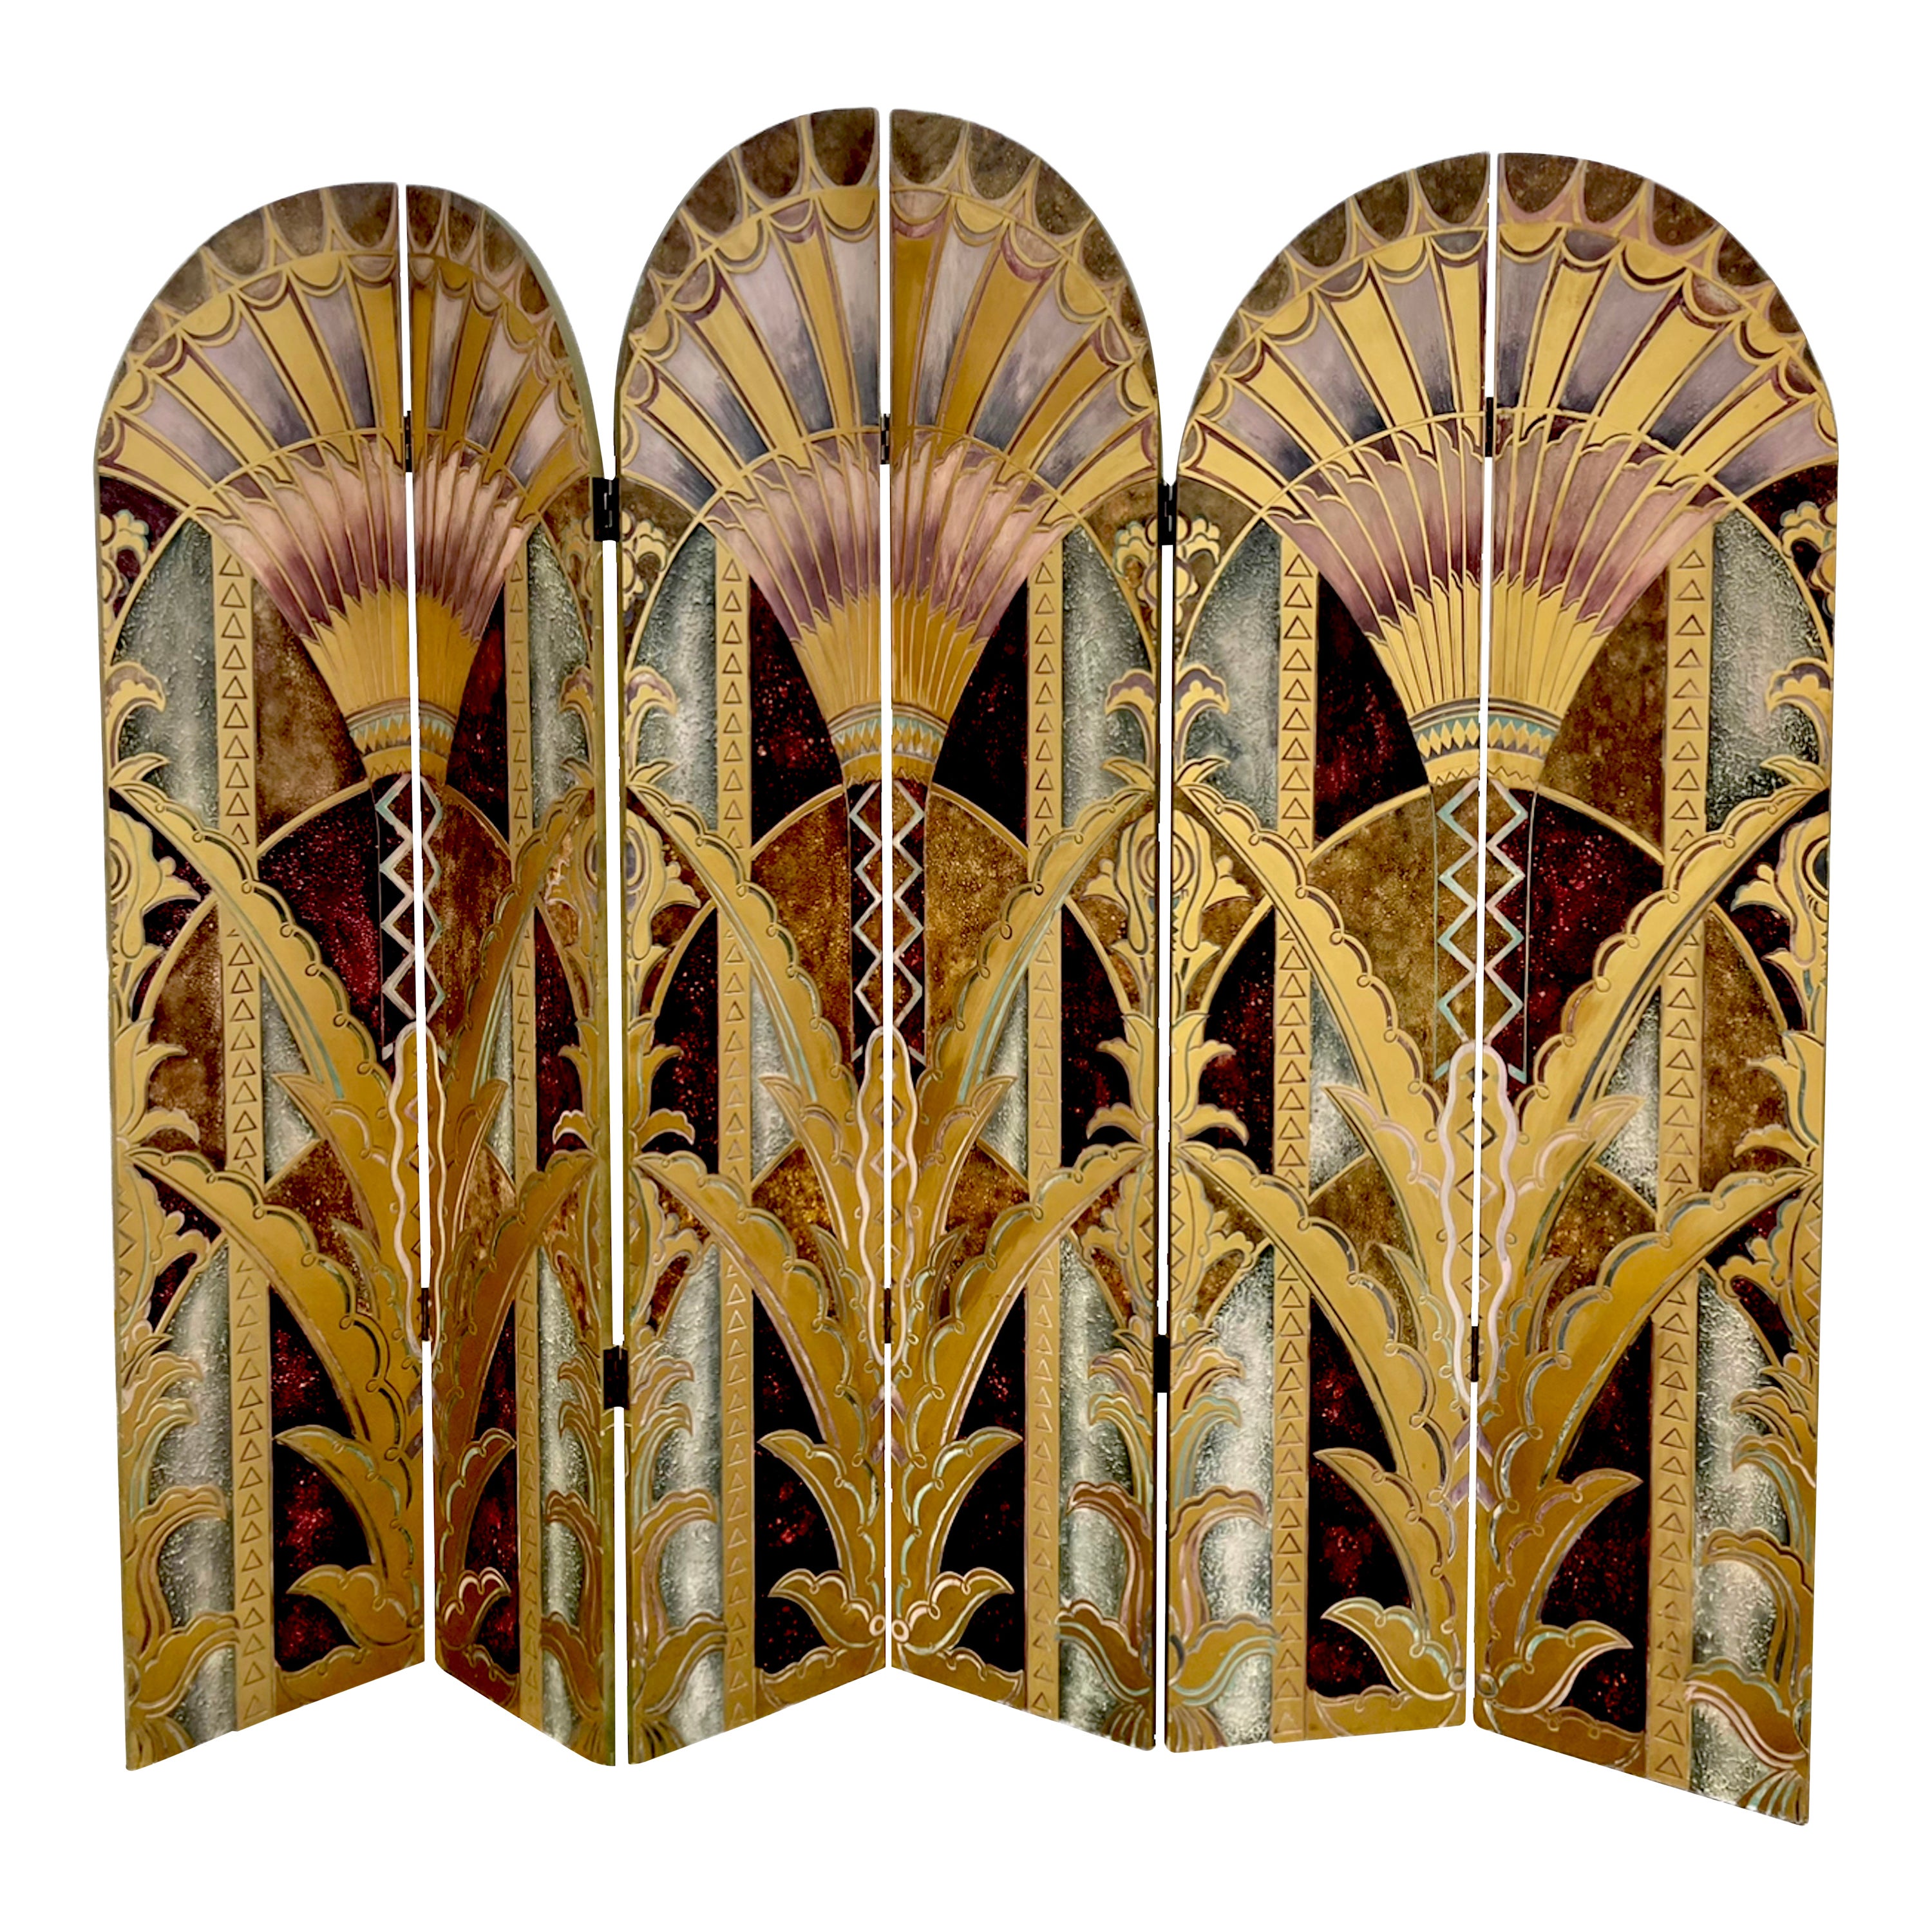 Art Deco Style Screen After William Van Alen, Chrysler Building Elevator Designs